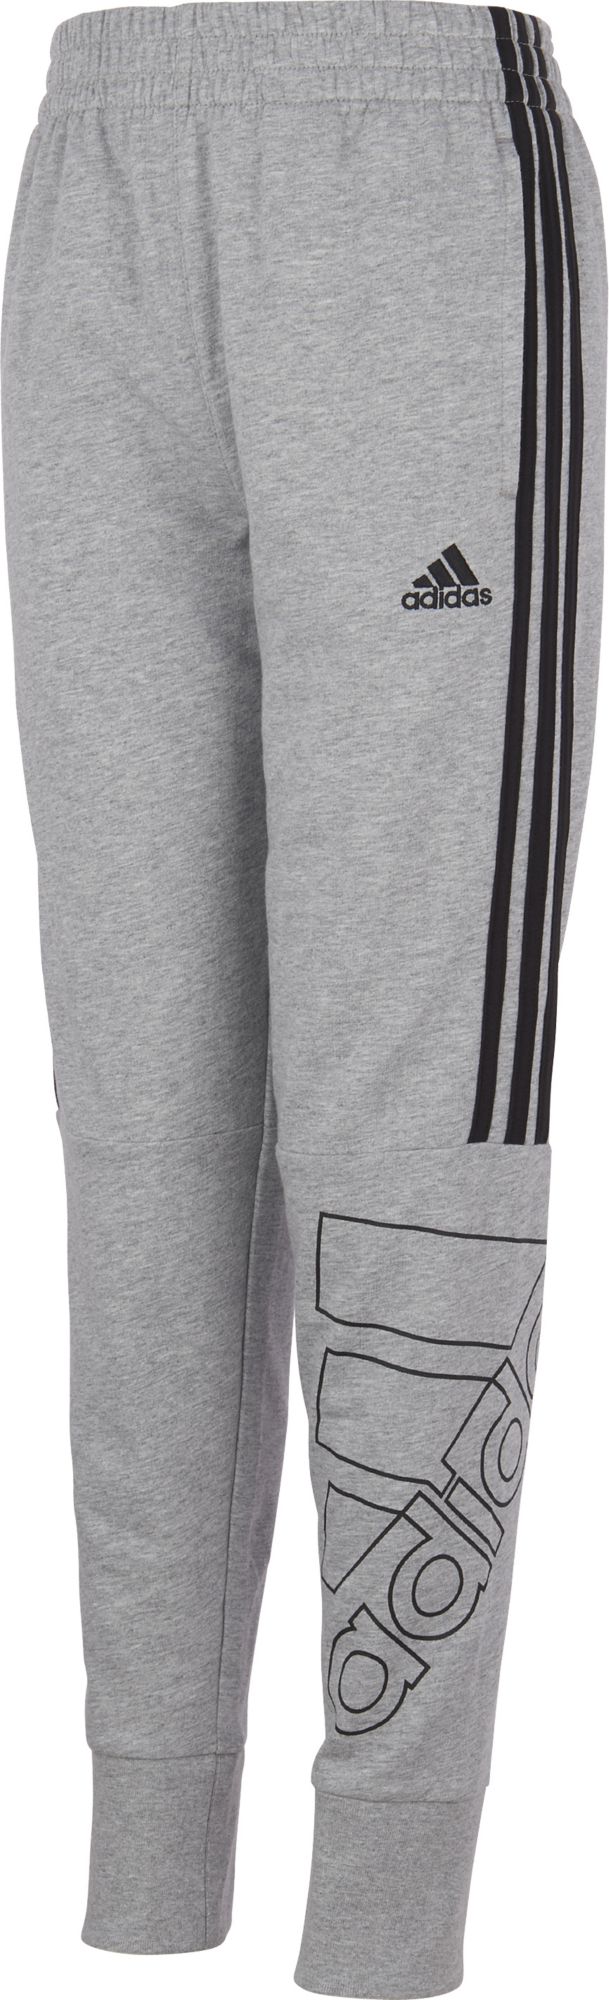 grey adidas sweatpants womens